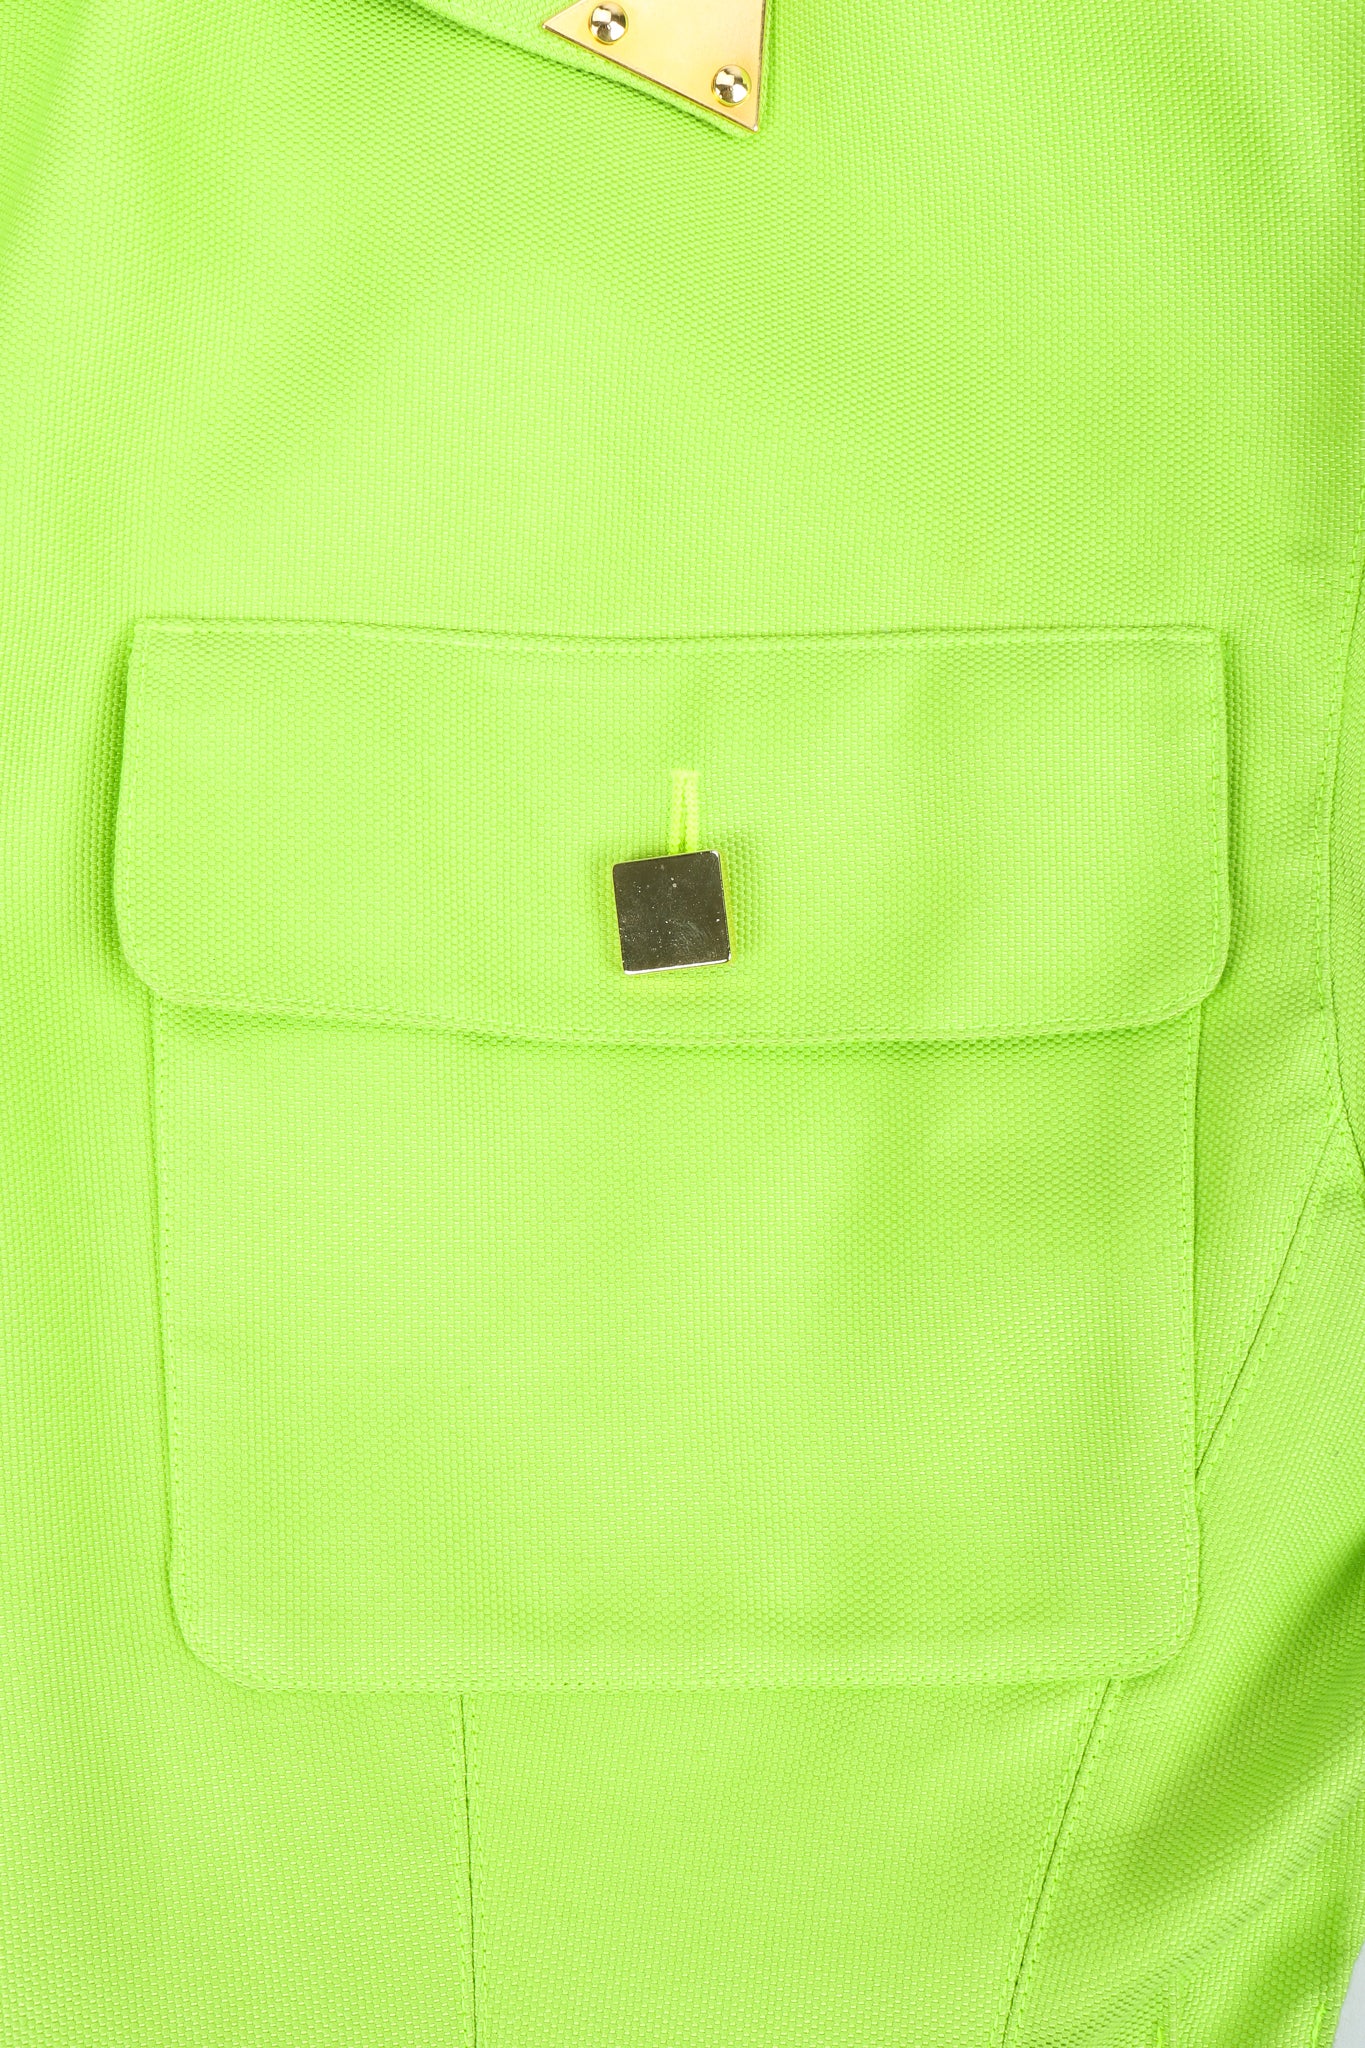 Vintage Claude Montana Neon Safari Zip Jacket pocket button detail